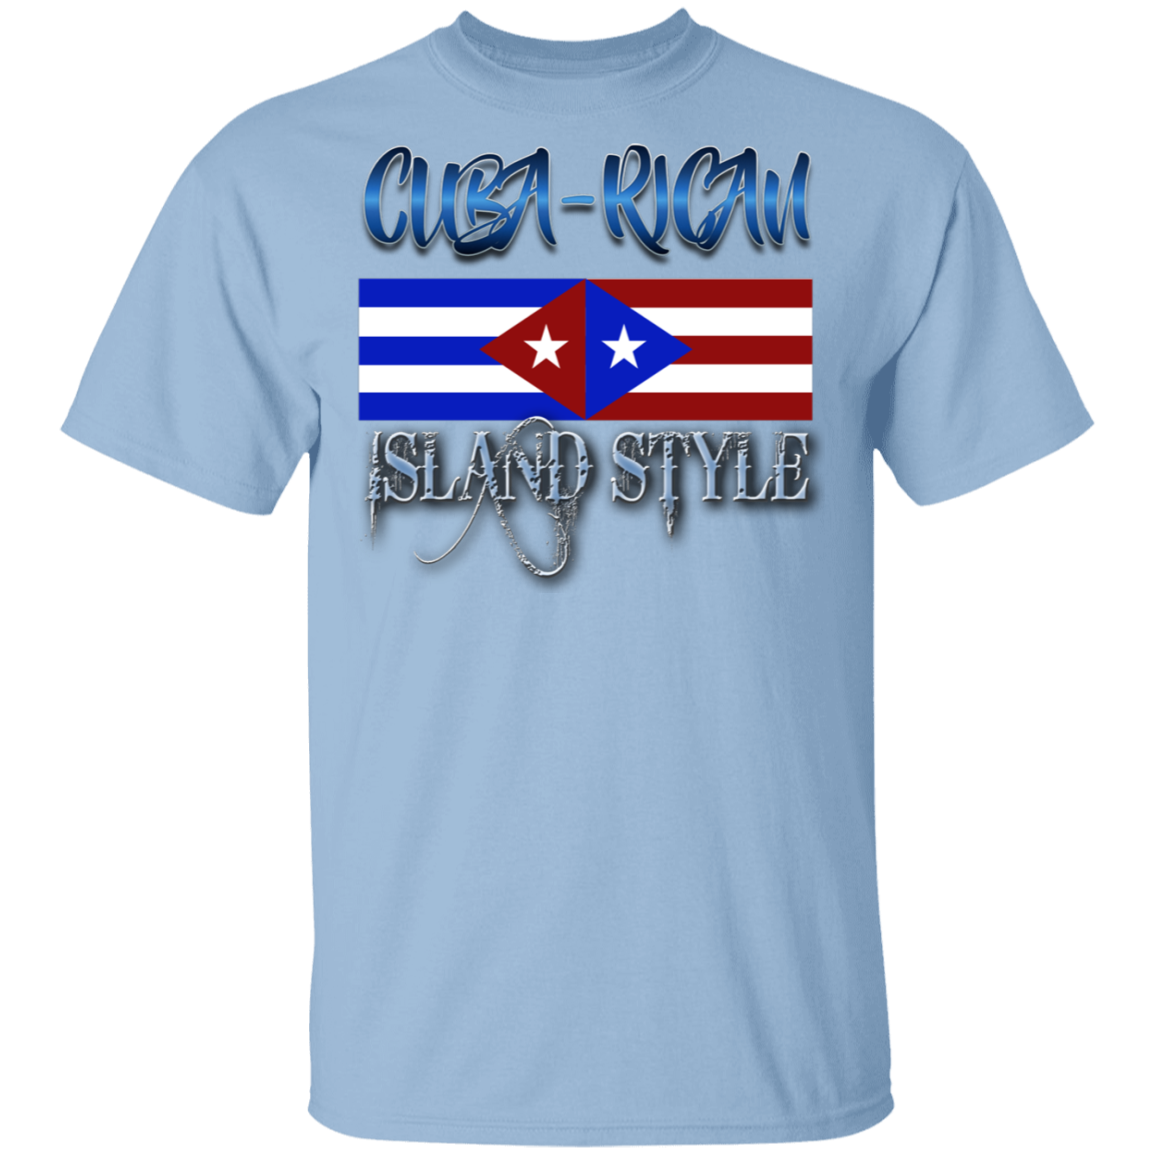 CUBA-RICAN  ISLAND STYLE 5.3 oz. T-Shirt